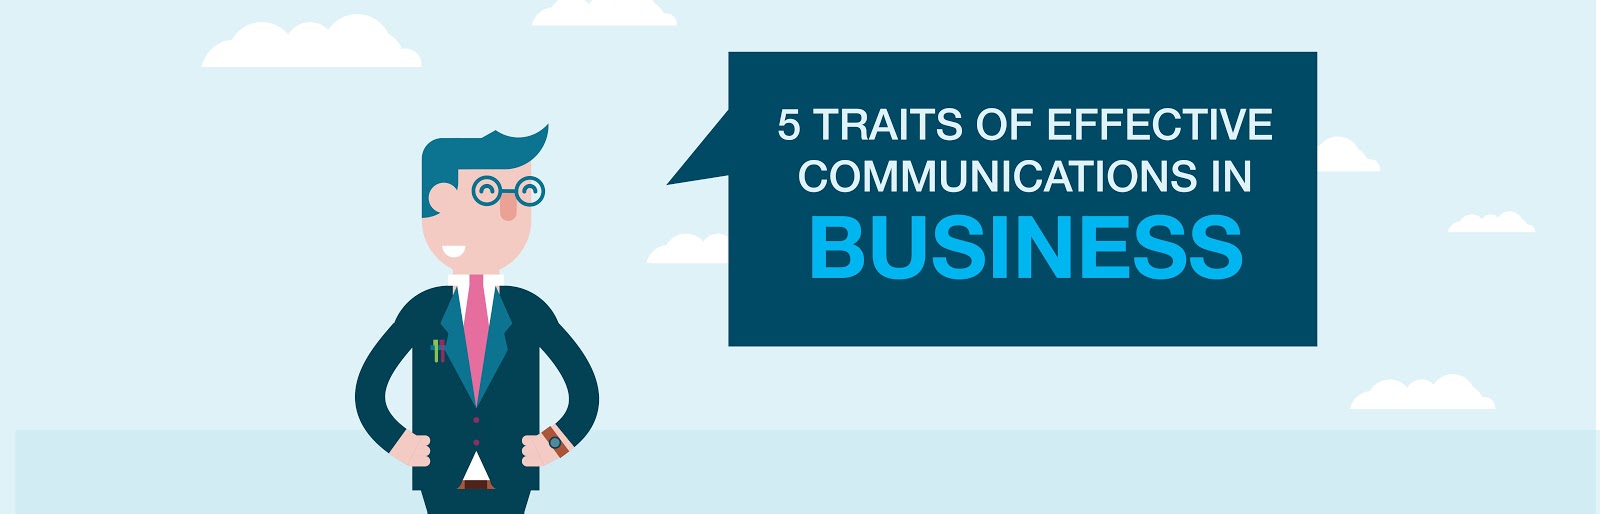 Five characteristics of successful business communicators
